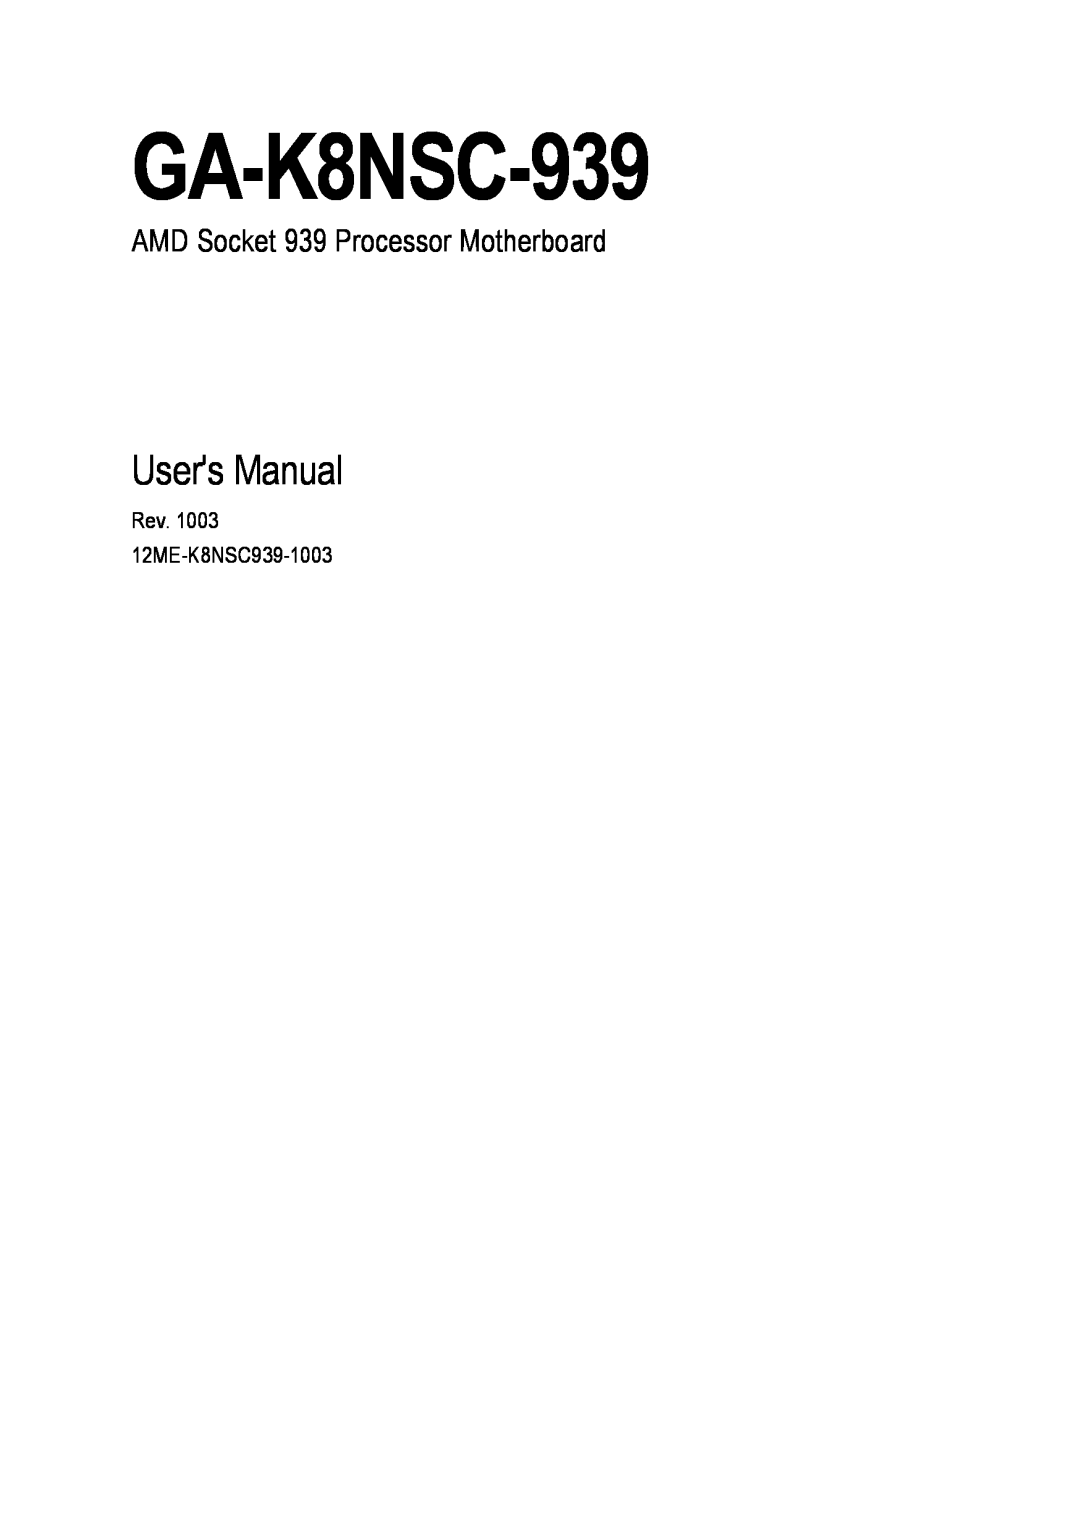 AMD GA-K8NSC-939 user manual Users Manual, AMD Socket 939 Processor Motherboard, Rev. 1003 12ME-K8NSC939-1003 